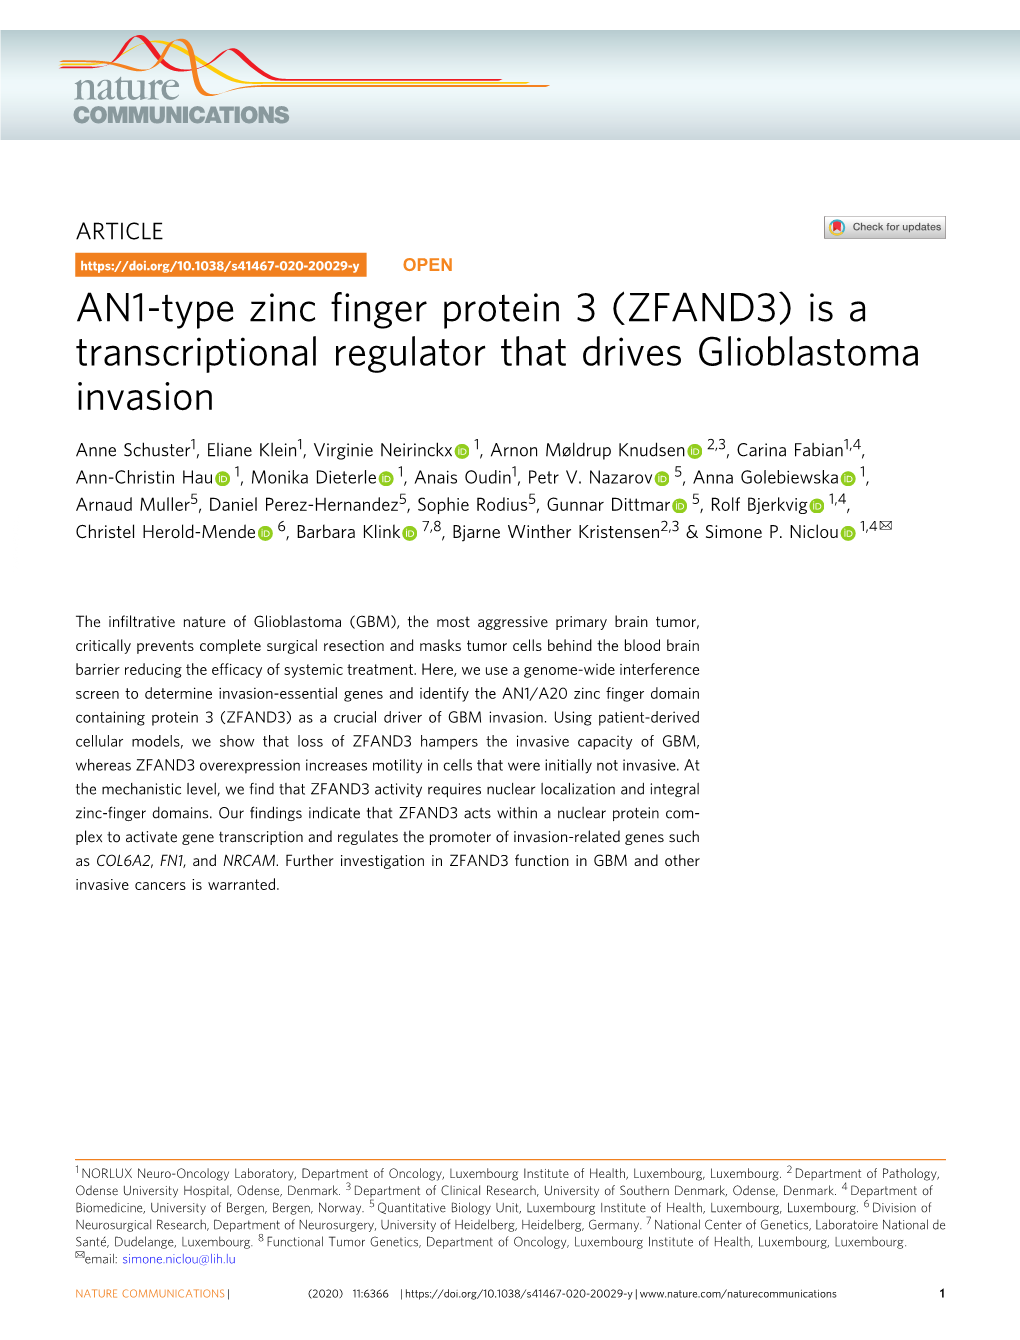 Is a Transcriptional Regulator That Drives Glioblastoma Invasion